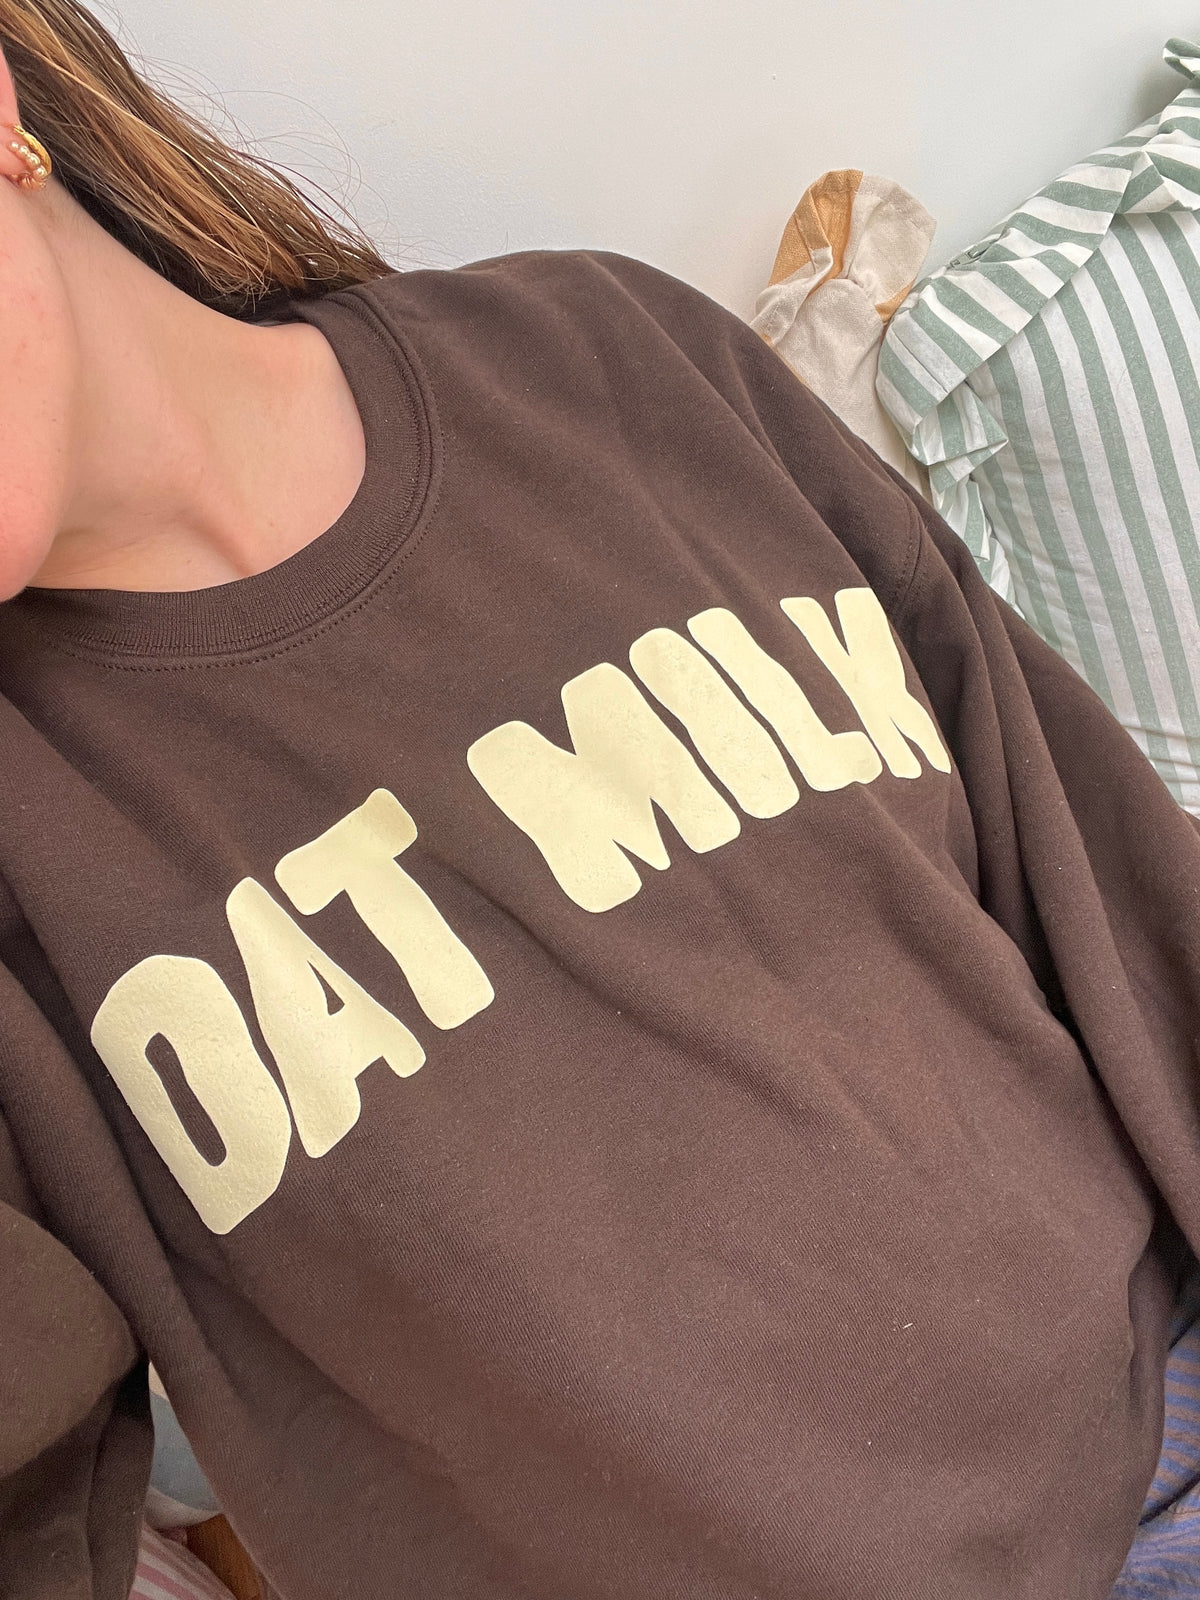 The Oat Milk Oversized Sweatshirt